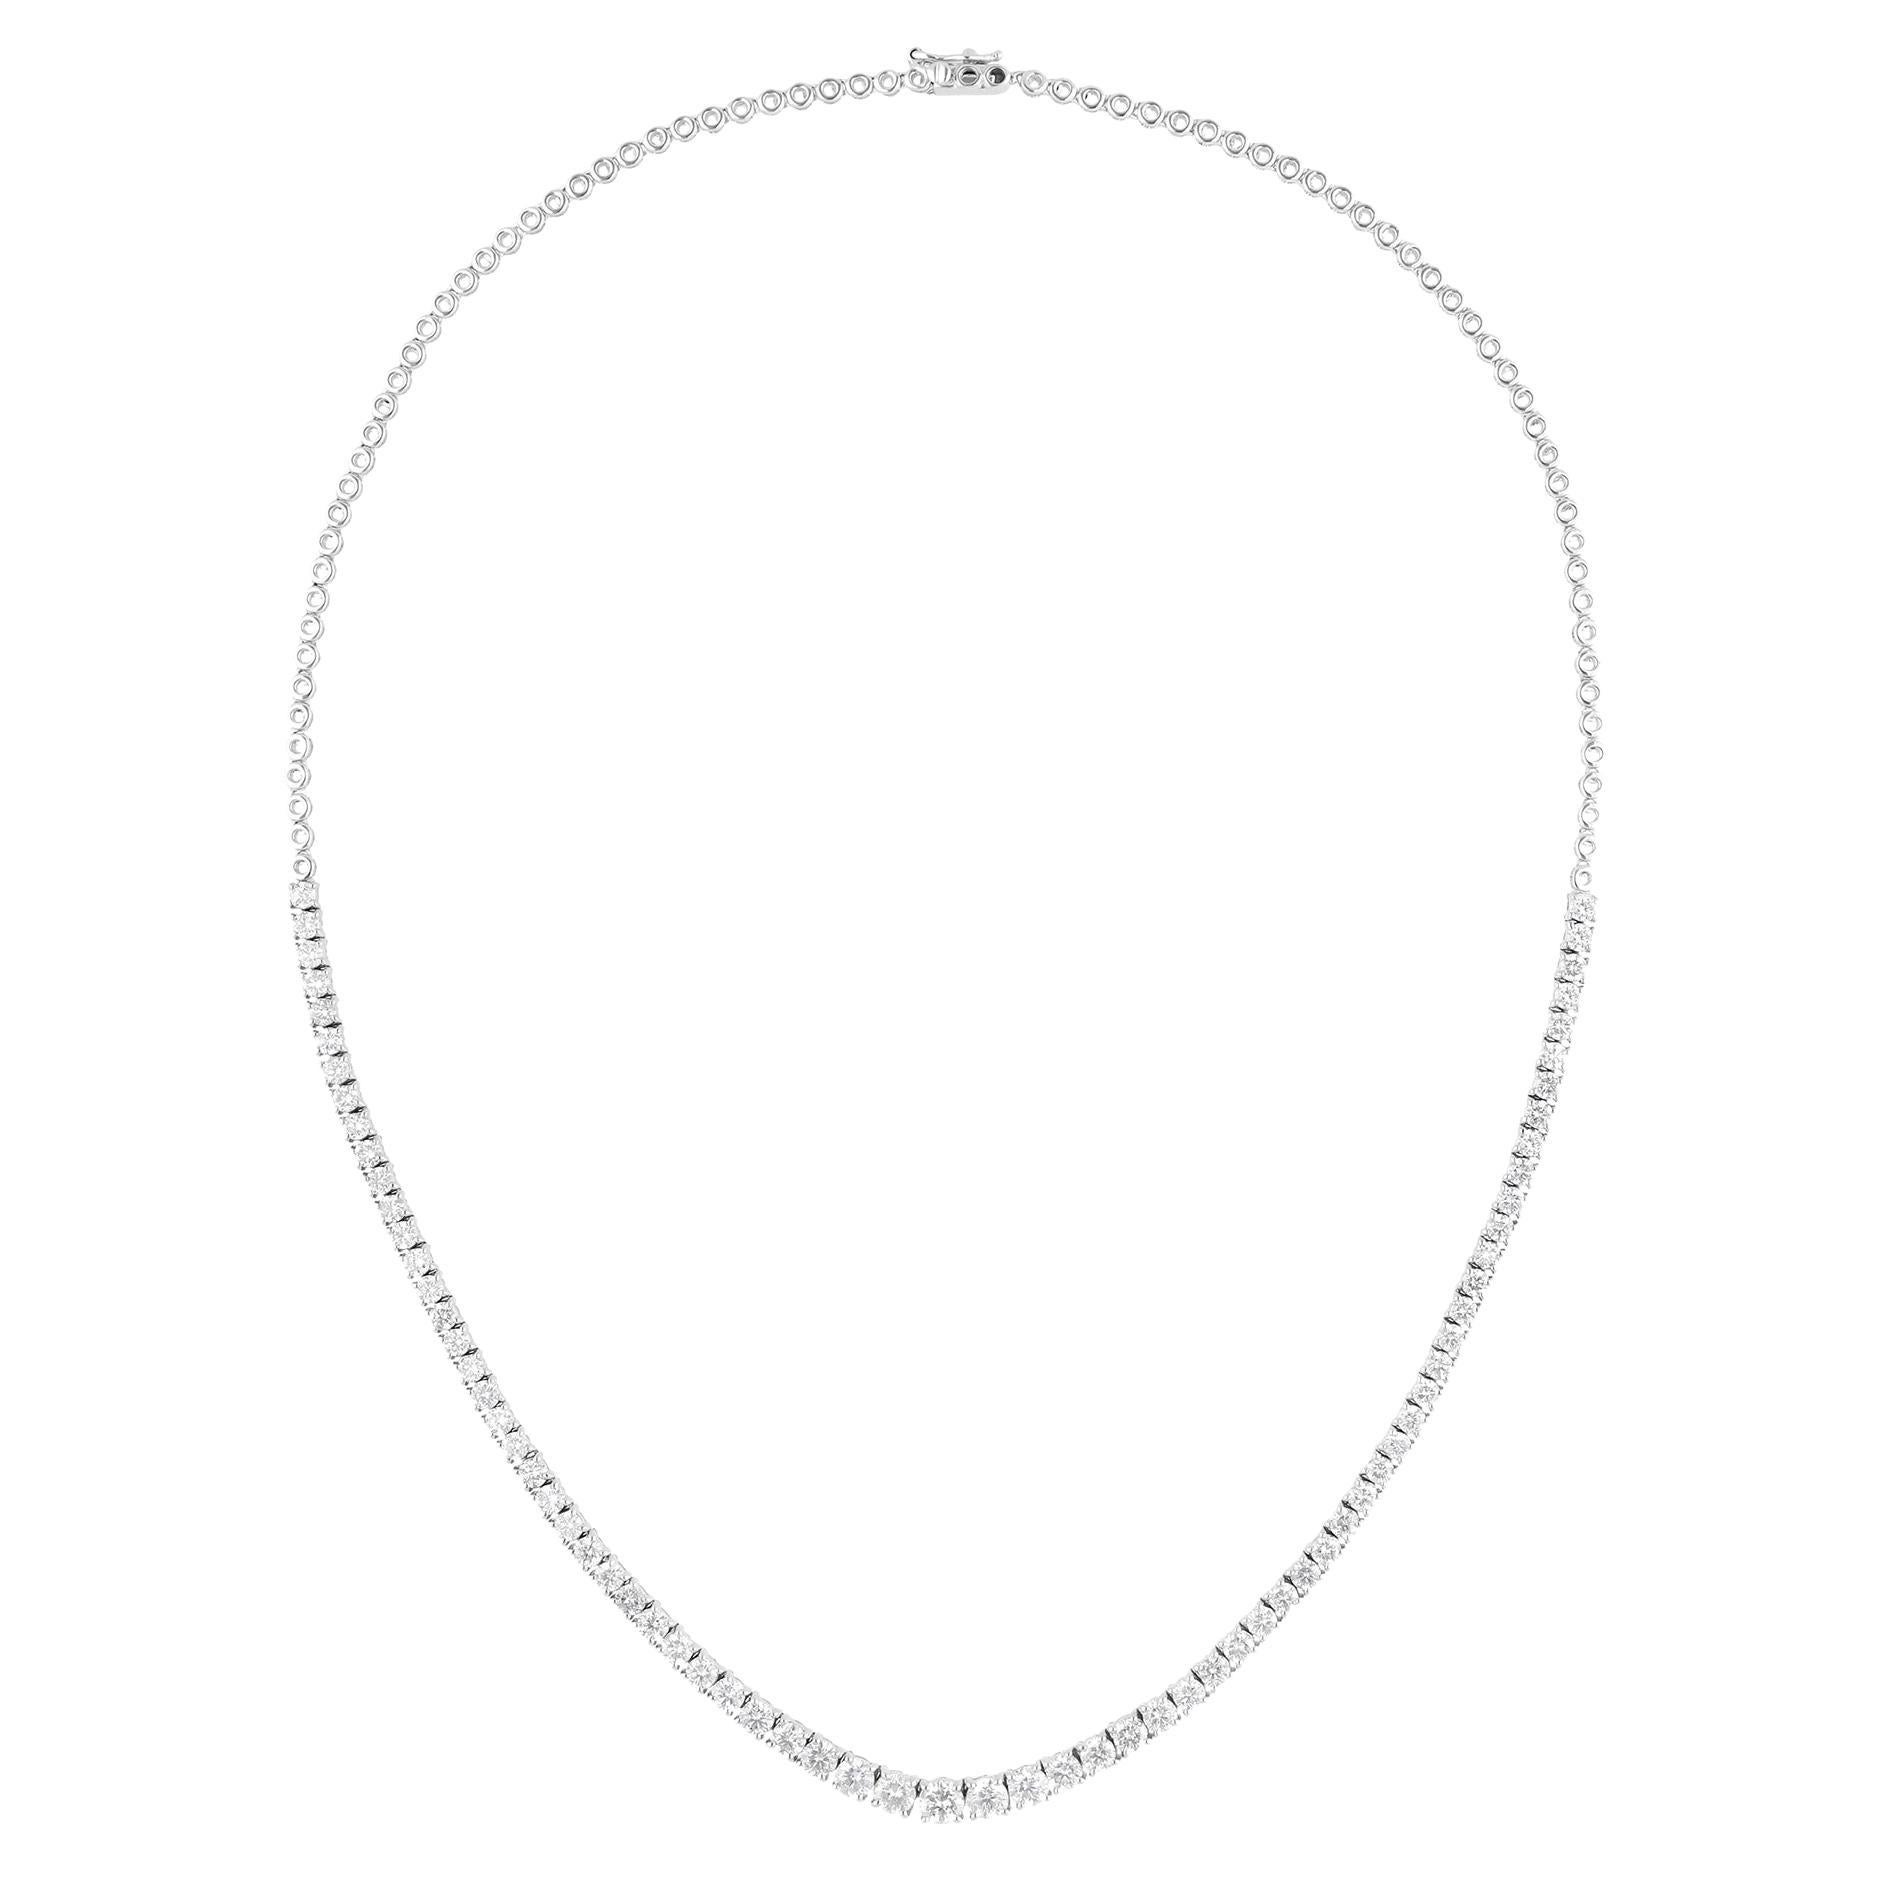 Natural 5.25 Carat Round Diamond Chain Necklace 18 Karat White Gold Fine Jewelry